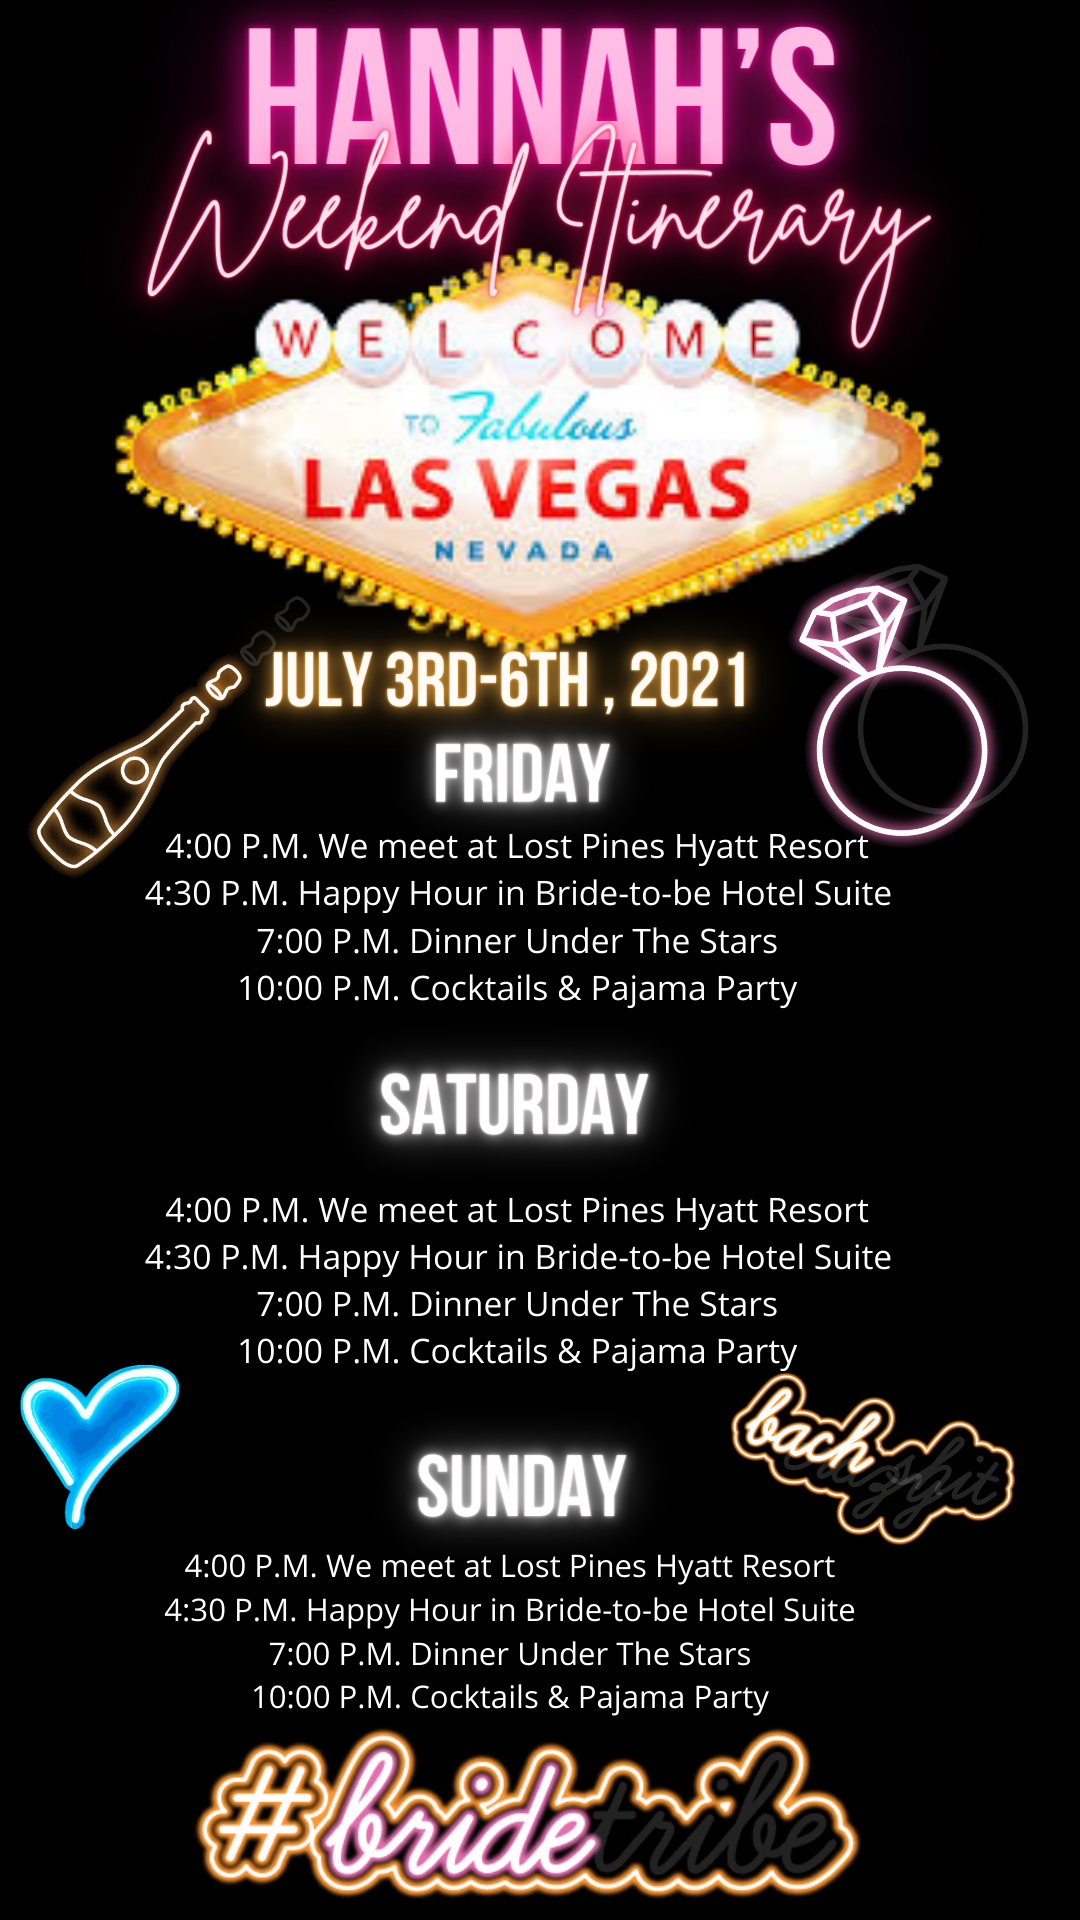 las Vegas itinerary and invite 